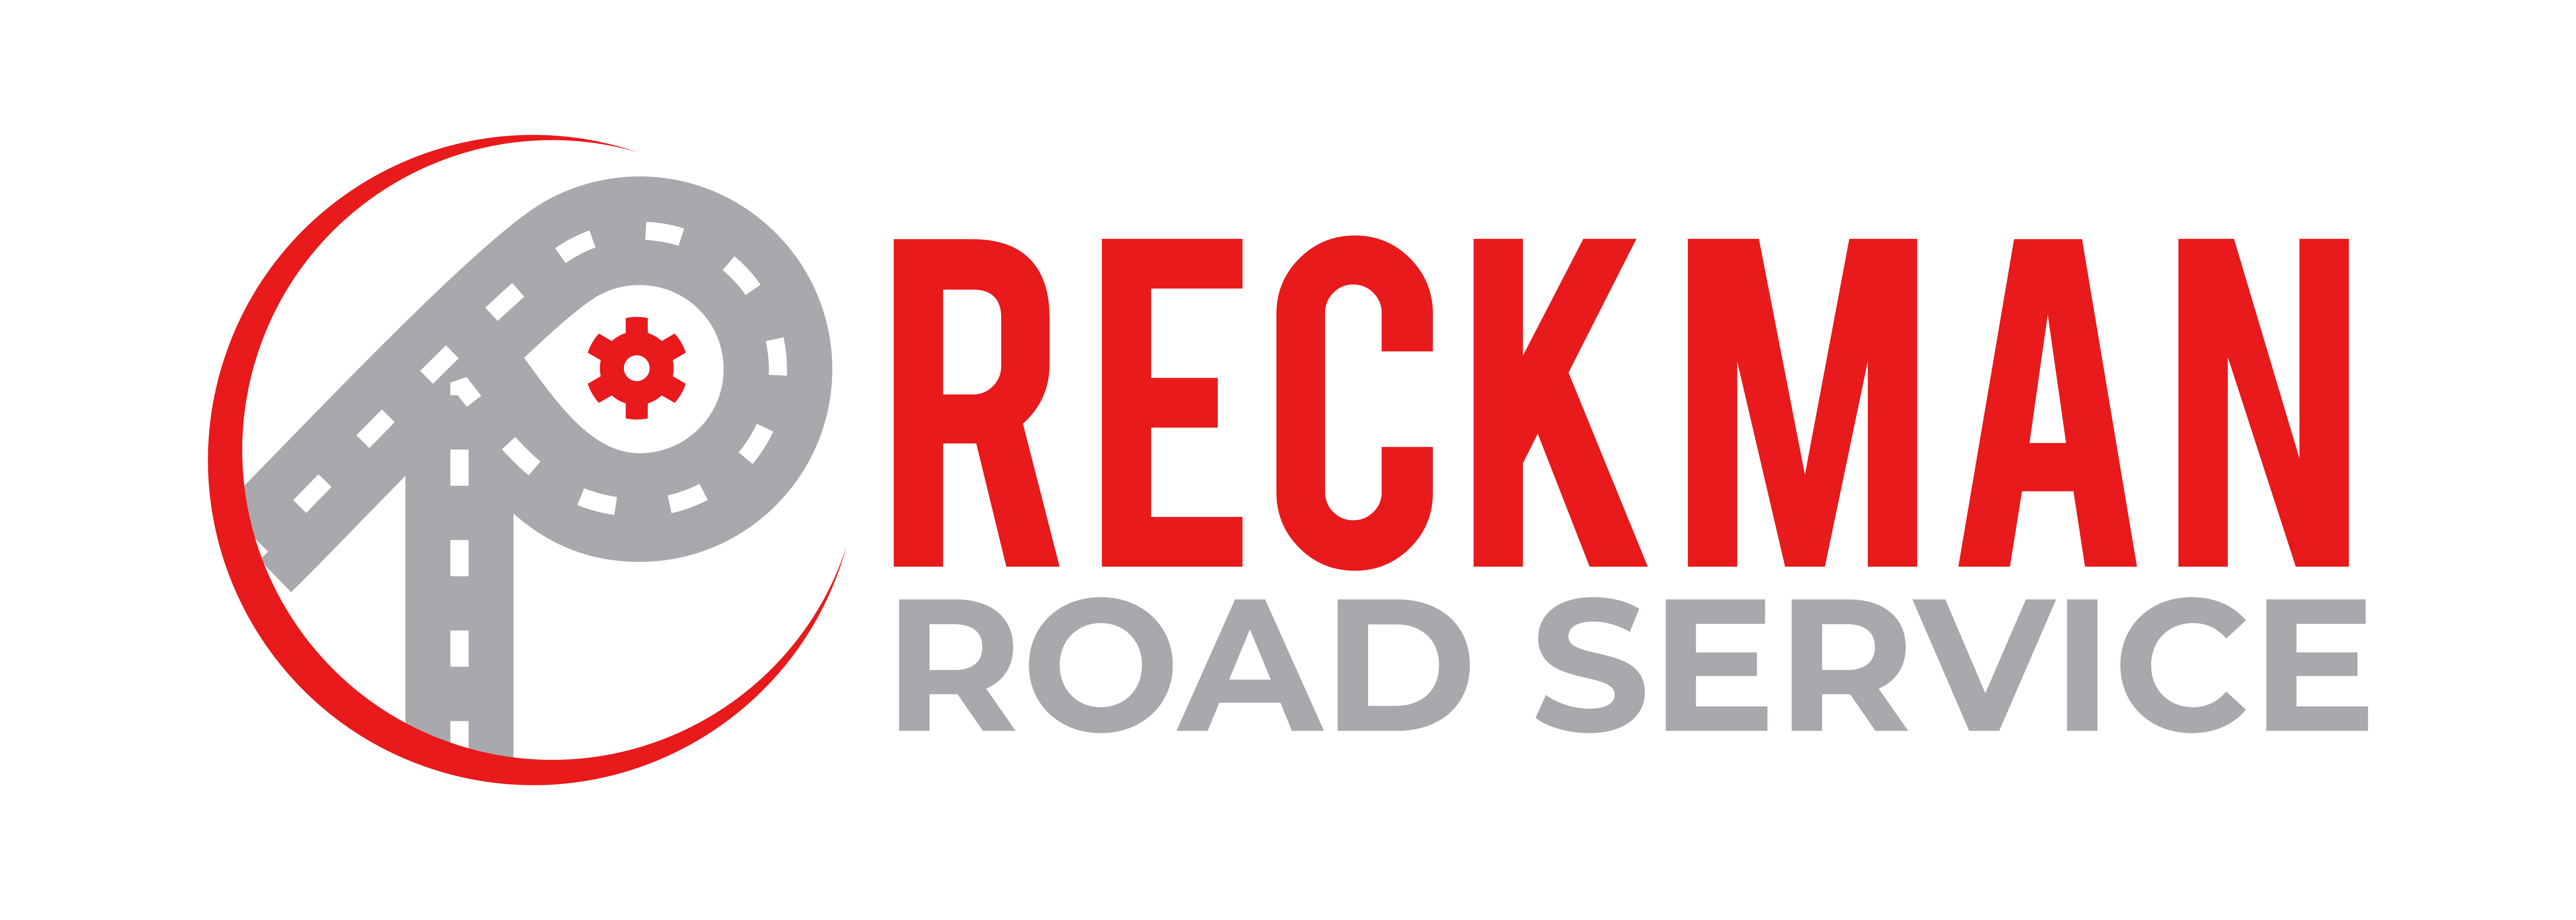 Reckman Road Service